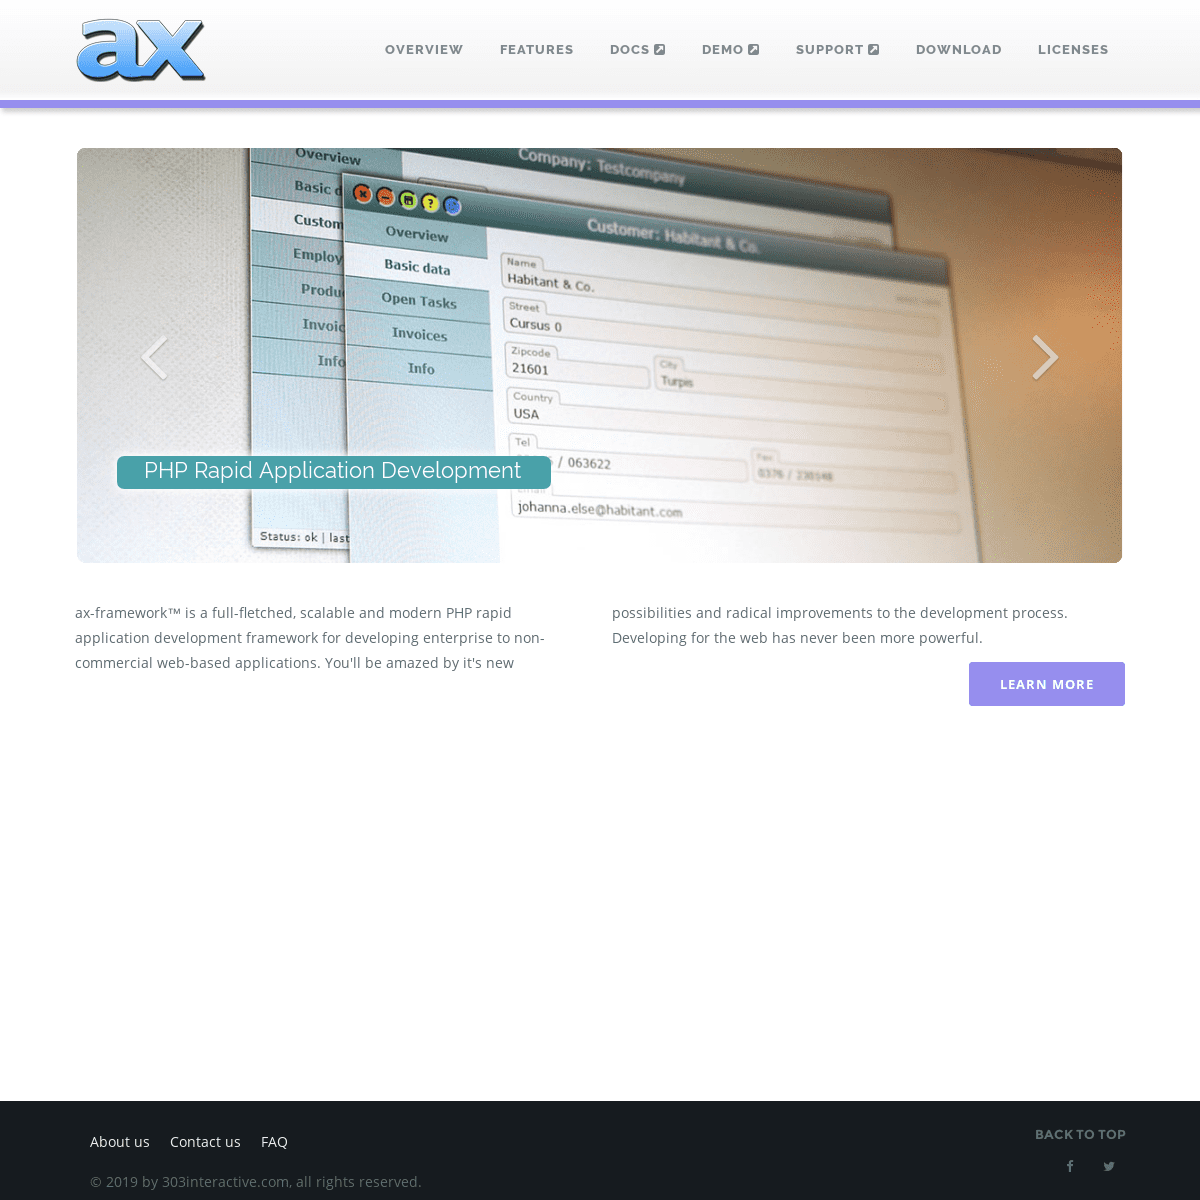 A complete backup of ax-framework.com